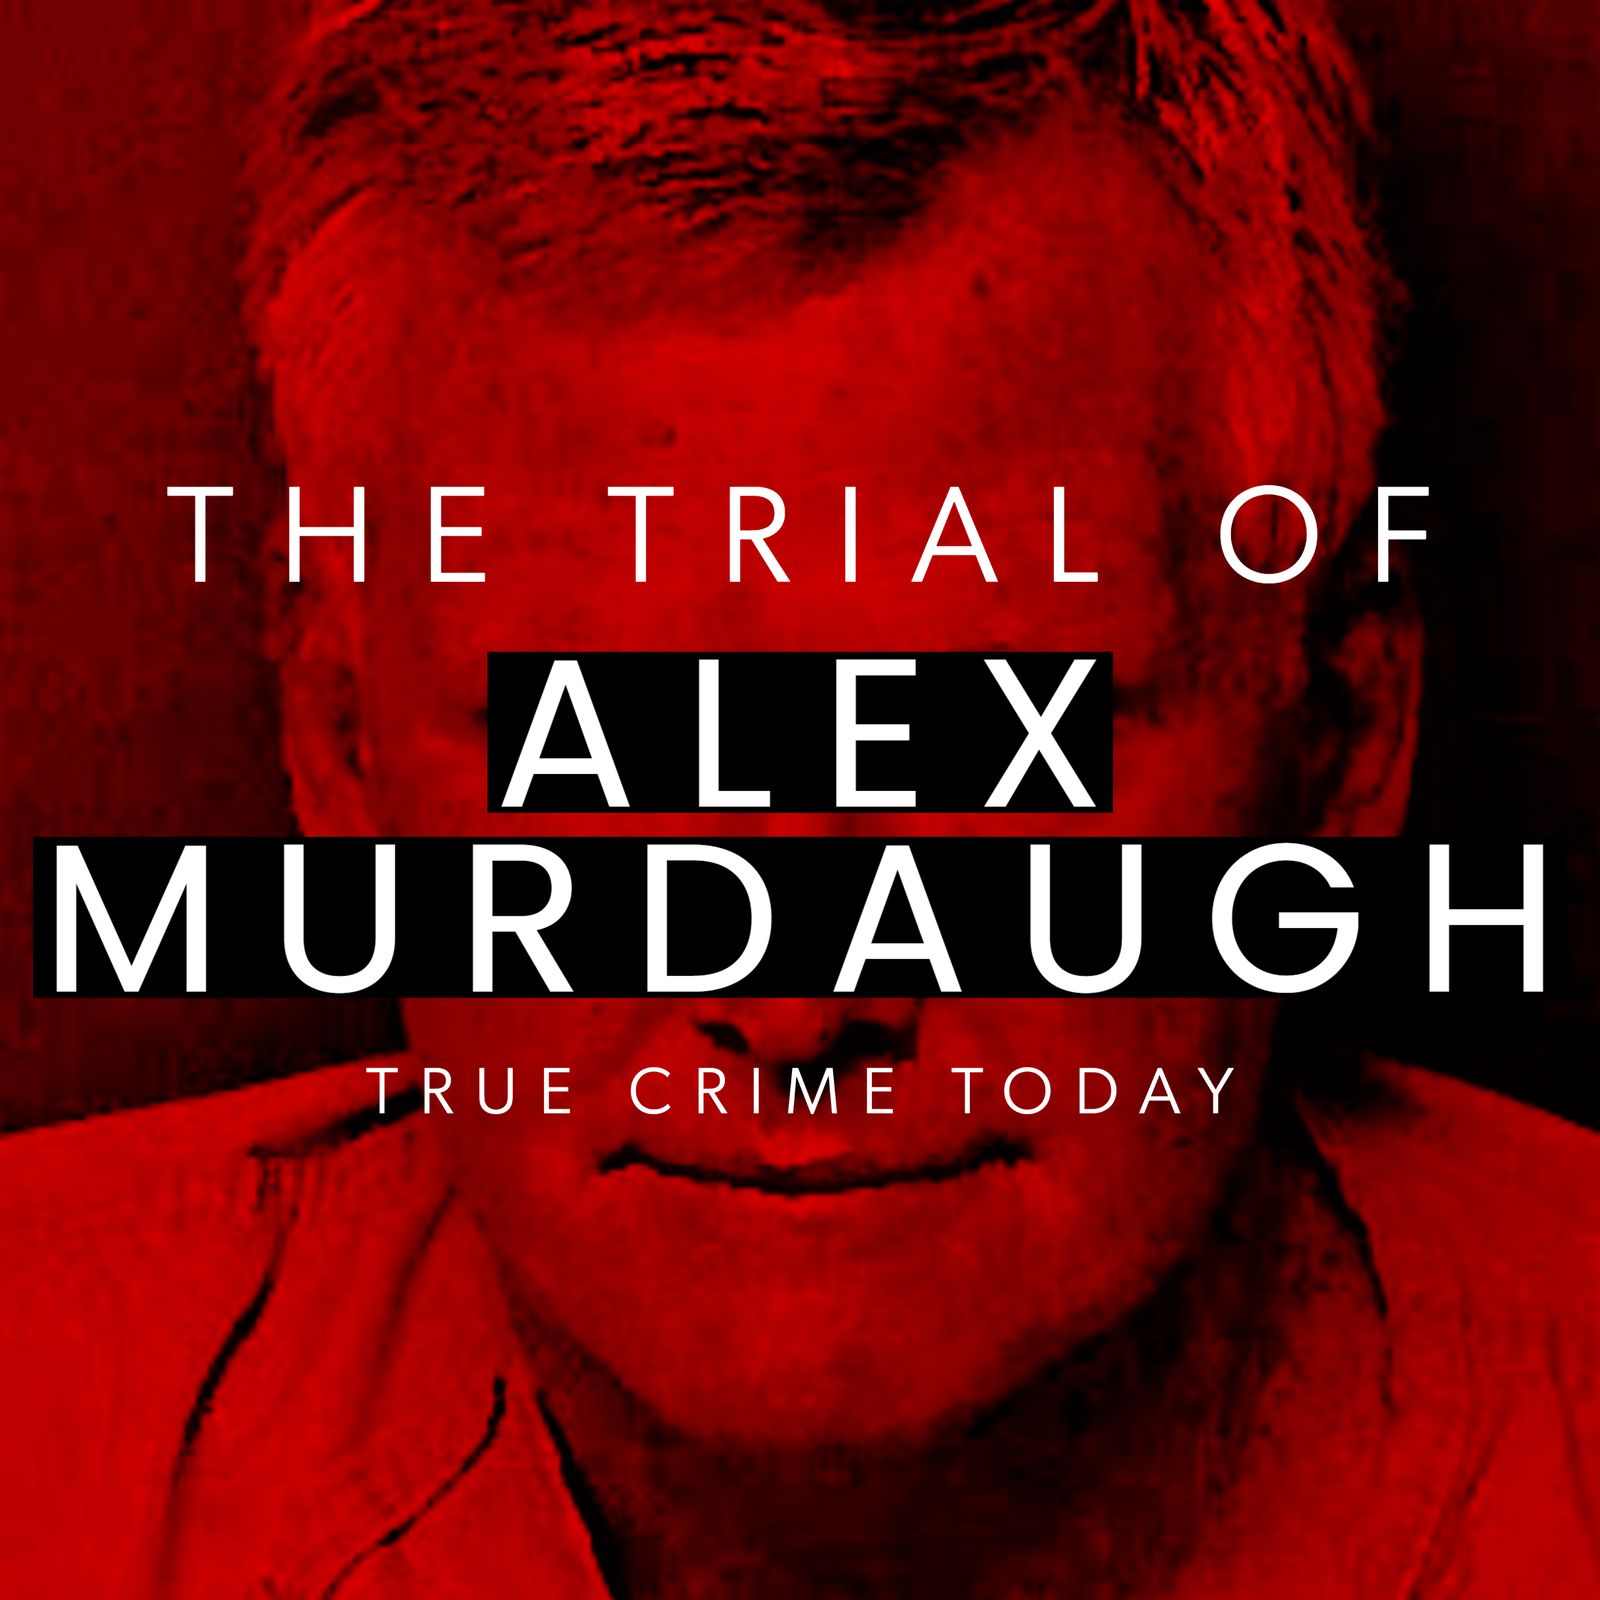 Murdaugh Evil Scheming Continues Behind Bars